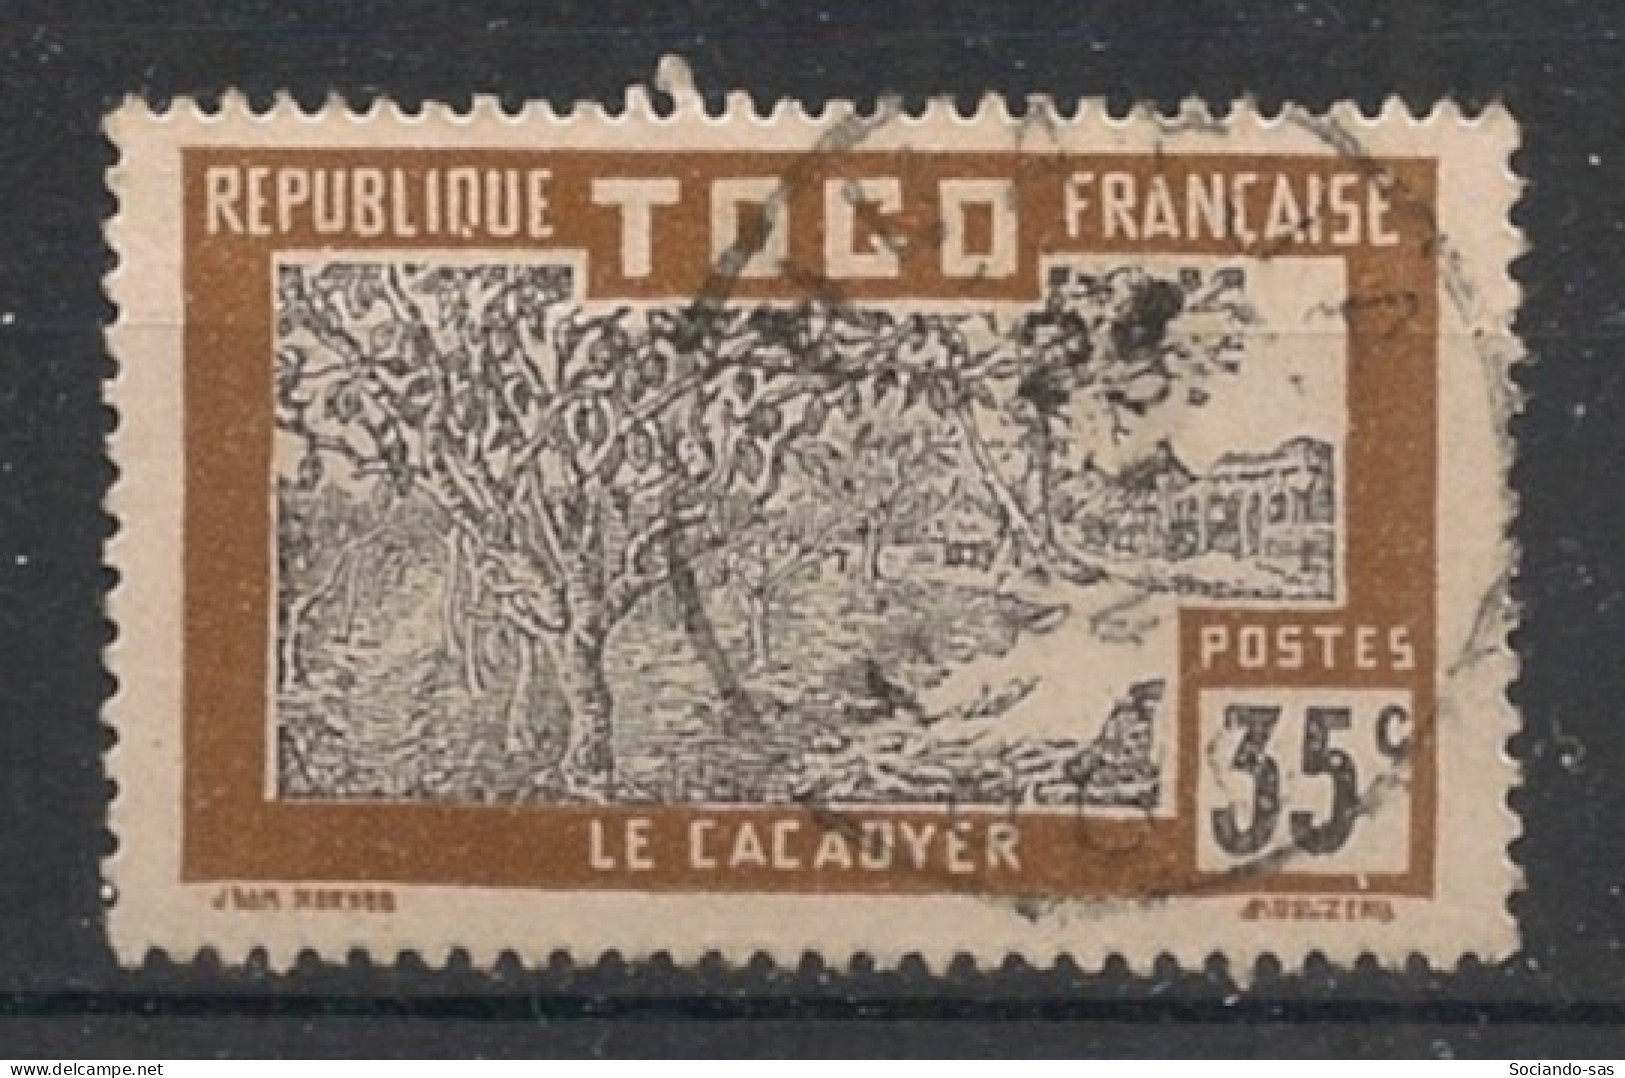 TOGO - 1924 - N°YT. 133 - Cacaoyer 35c Brun - Oblitéré / Used - Gebraucht